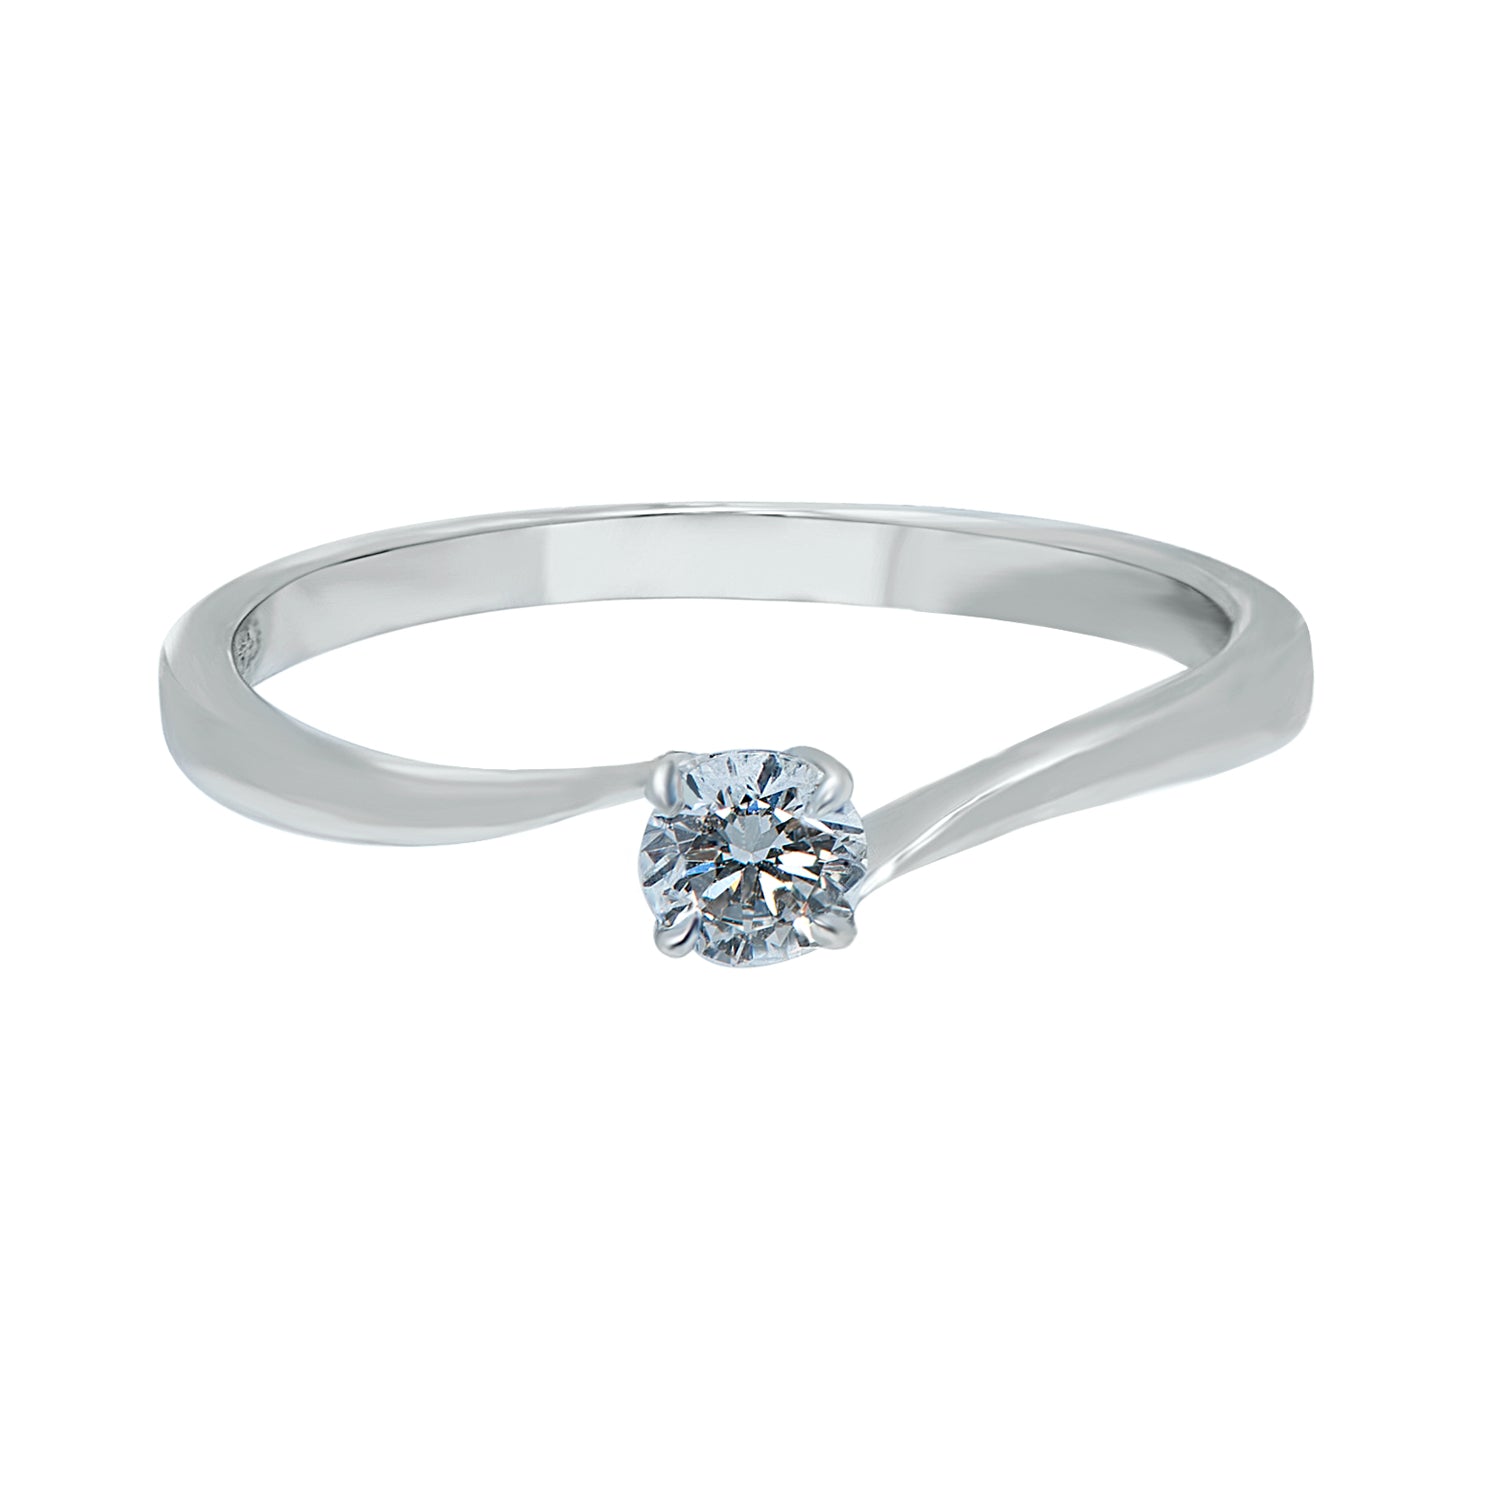 Diamond Engagement Ring. Μονόπετρο δαχτυλίδι. Δαχτυλίδι για πρόταση γάμου. Δαχχτυλίδι με διαμάντι.